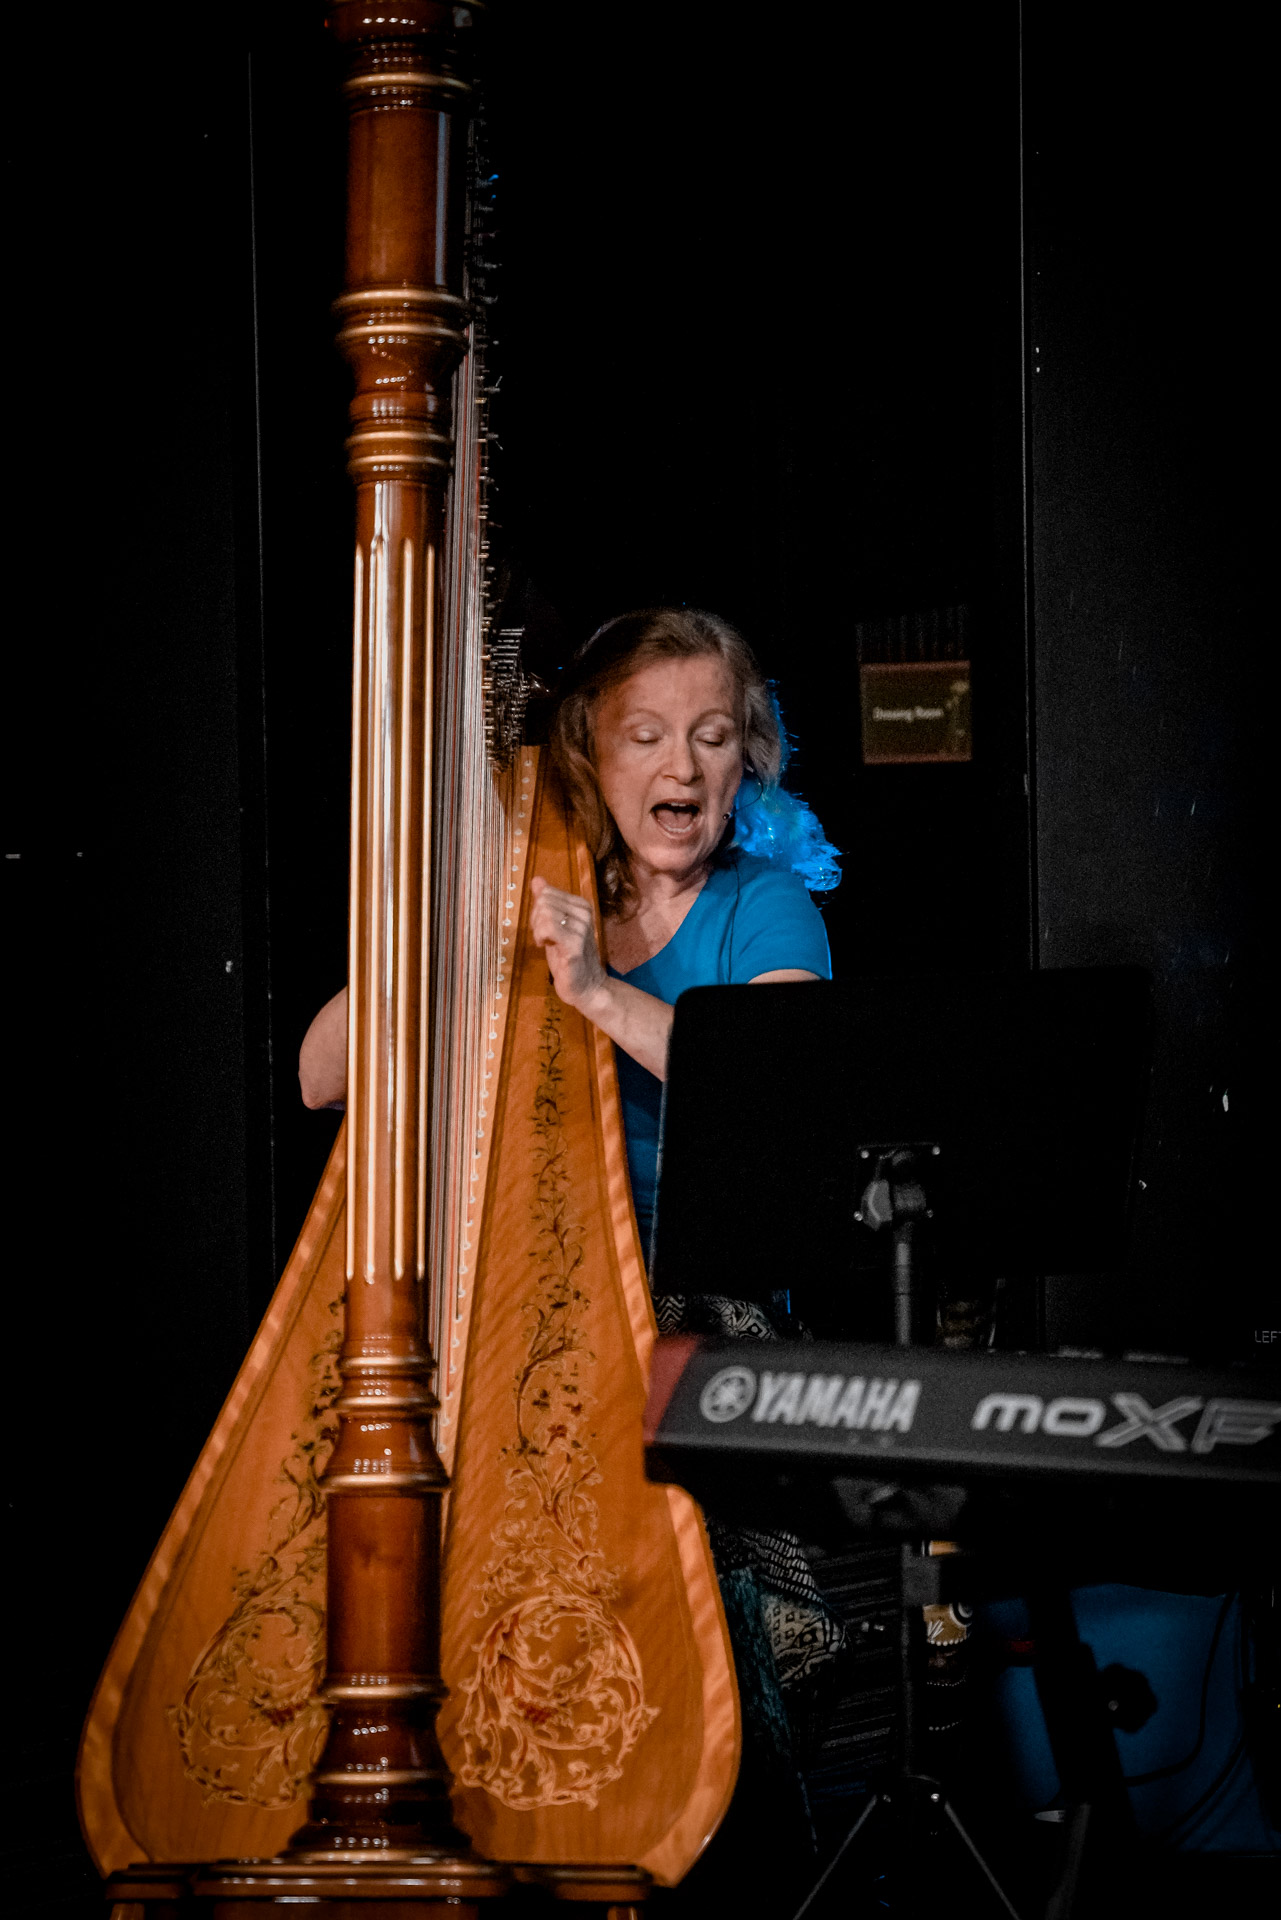 A harpist on stage